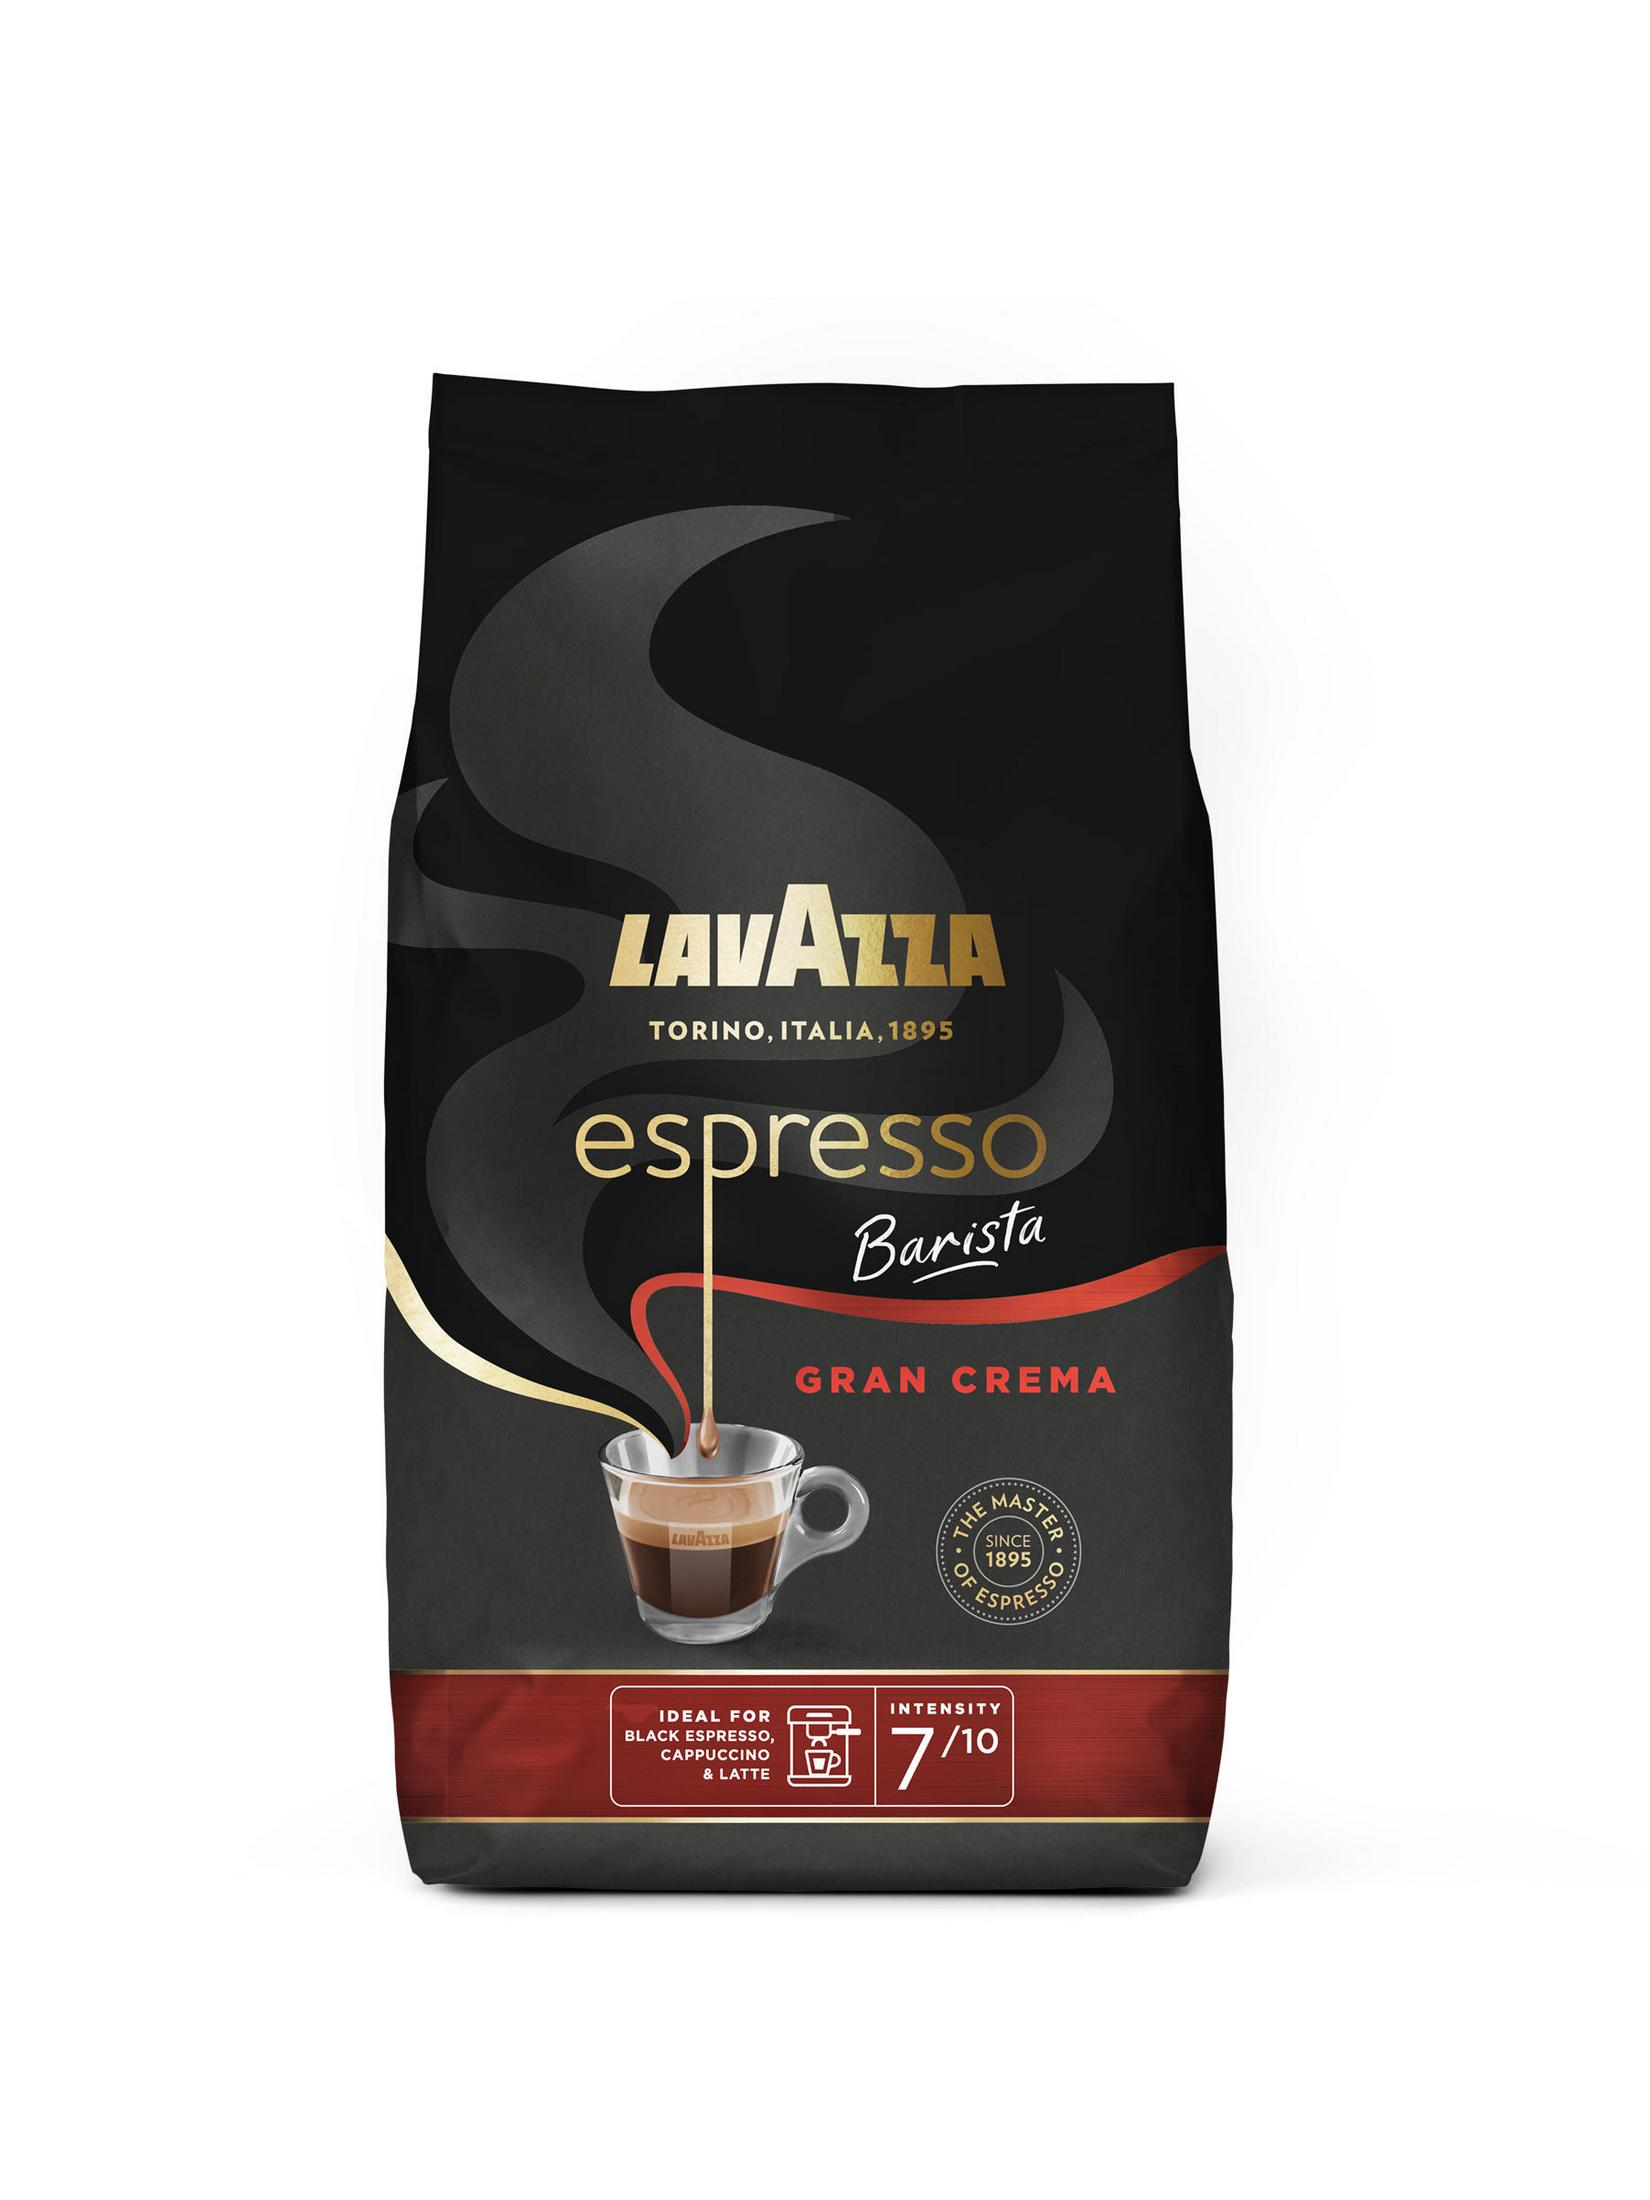 LAVAZZA 2735 (Kaffeevollautomaten) CREMA BARISTA GRAN ESPRESSO Kaffeebohnen 1KG